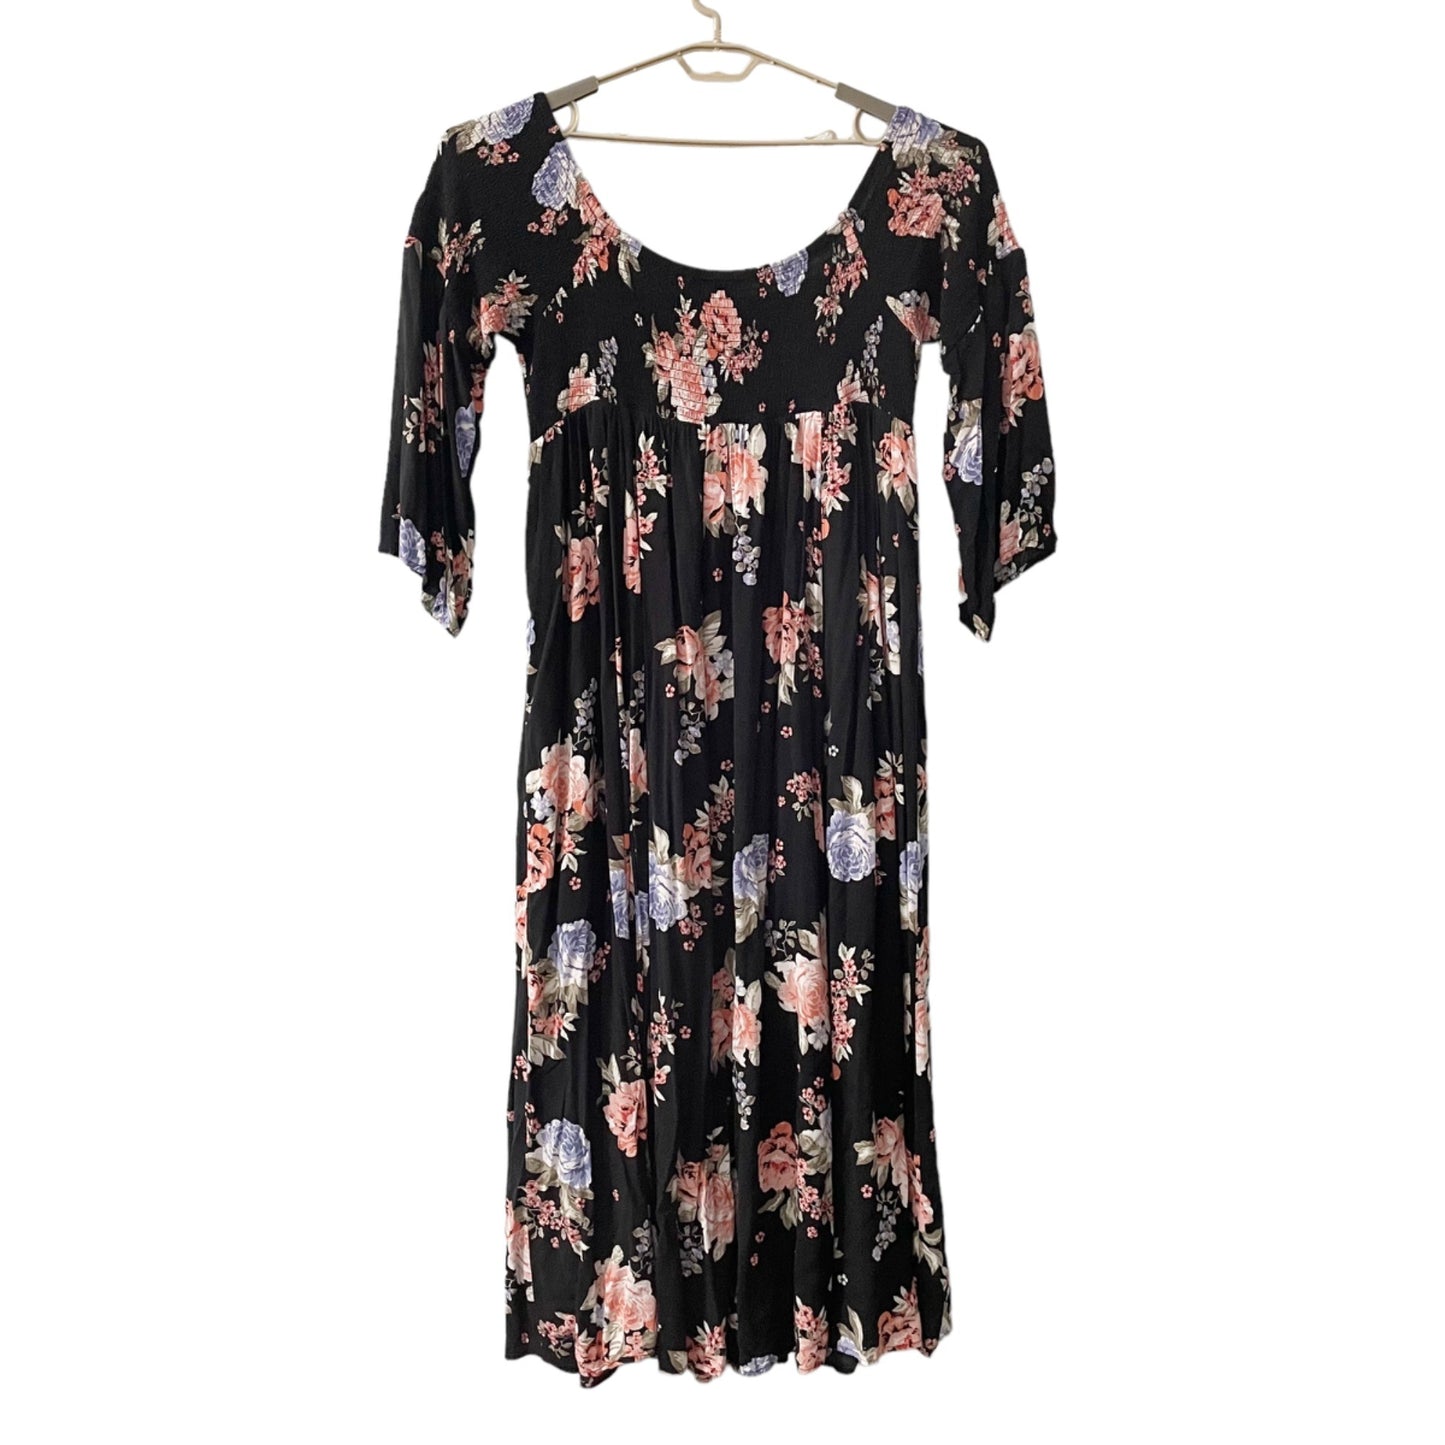 Torrid Black Floral Smocked Off the Shoulder Maxi Dress Women's Plus Size 4X